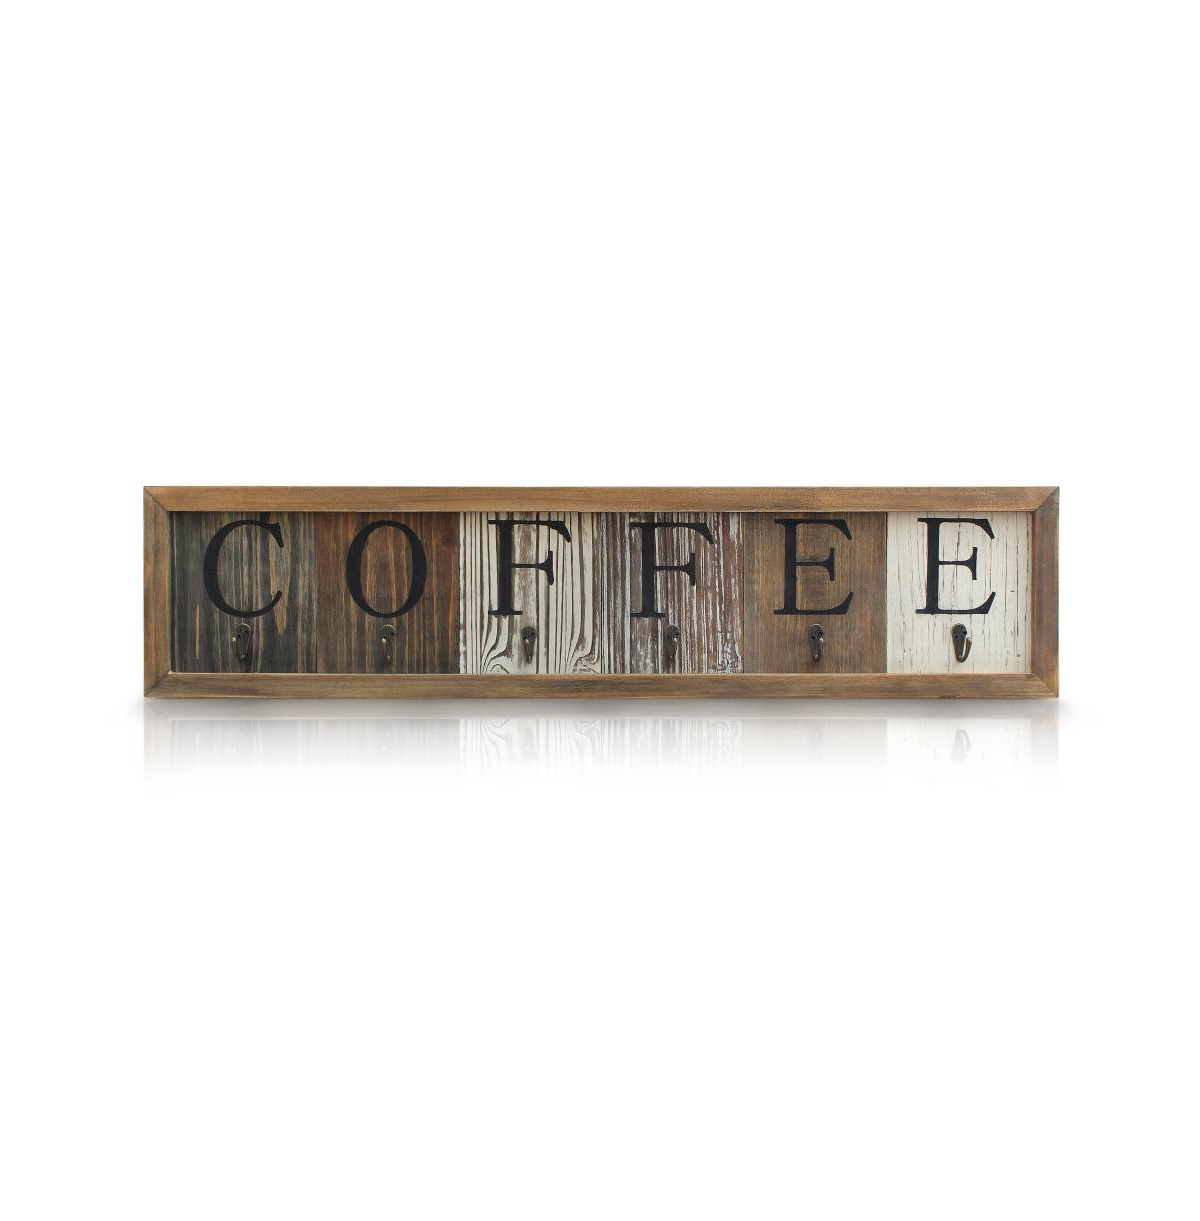 Rustic Coffee Mug Rack Wall Mounted, Printed Coffee Sign - 6 Coffee Cup Hooks - Wooden Coffee Mug Organizer - Distressed Coffee Rack Sign (31.5") - Ru